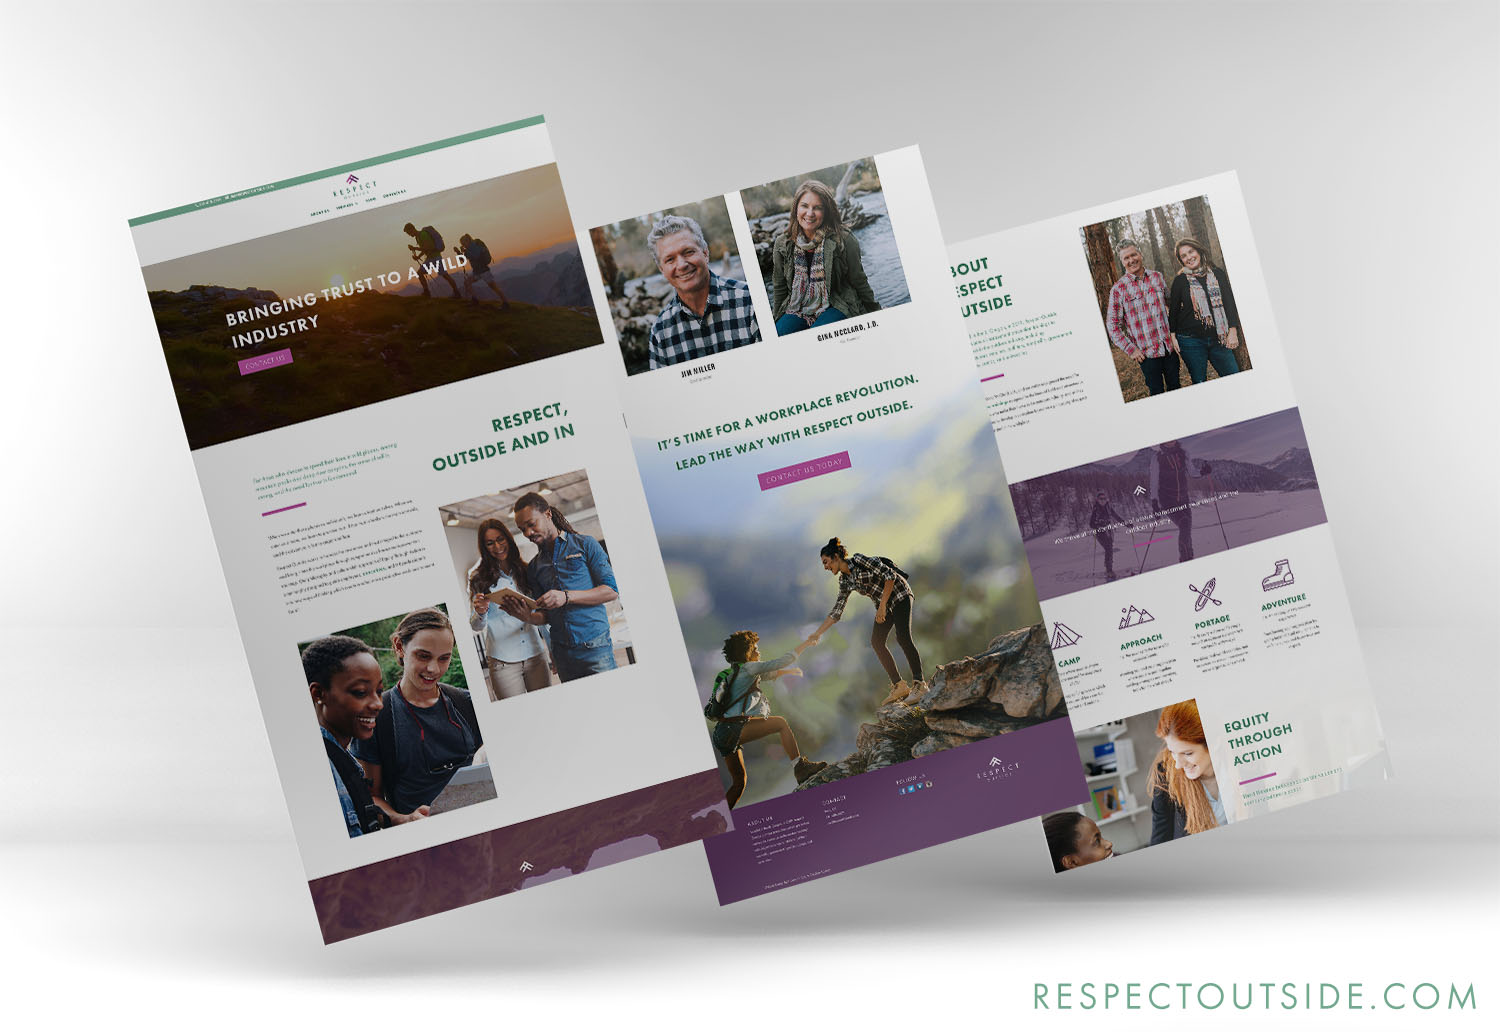 Respect Outside website designed by Brittney Gaddis Design